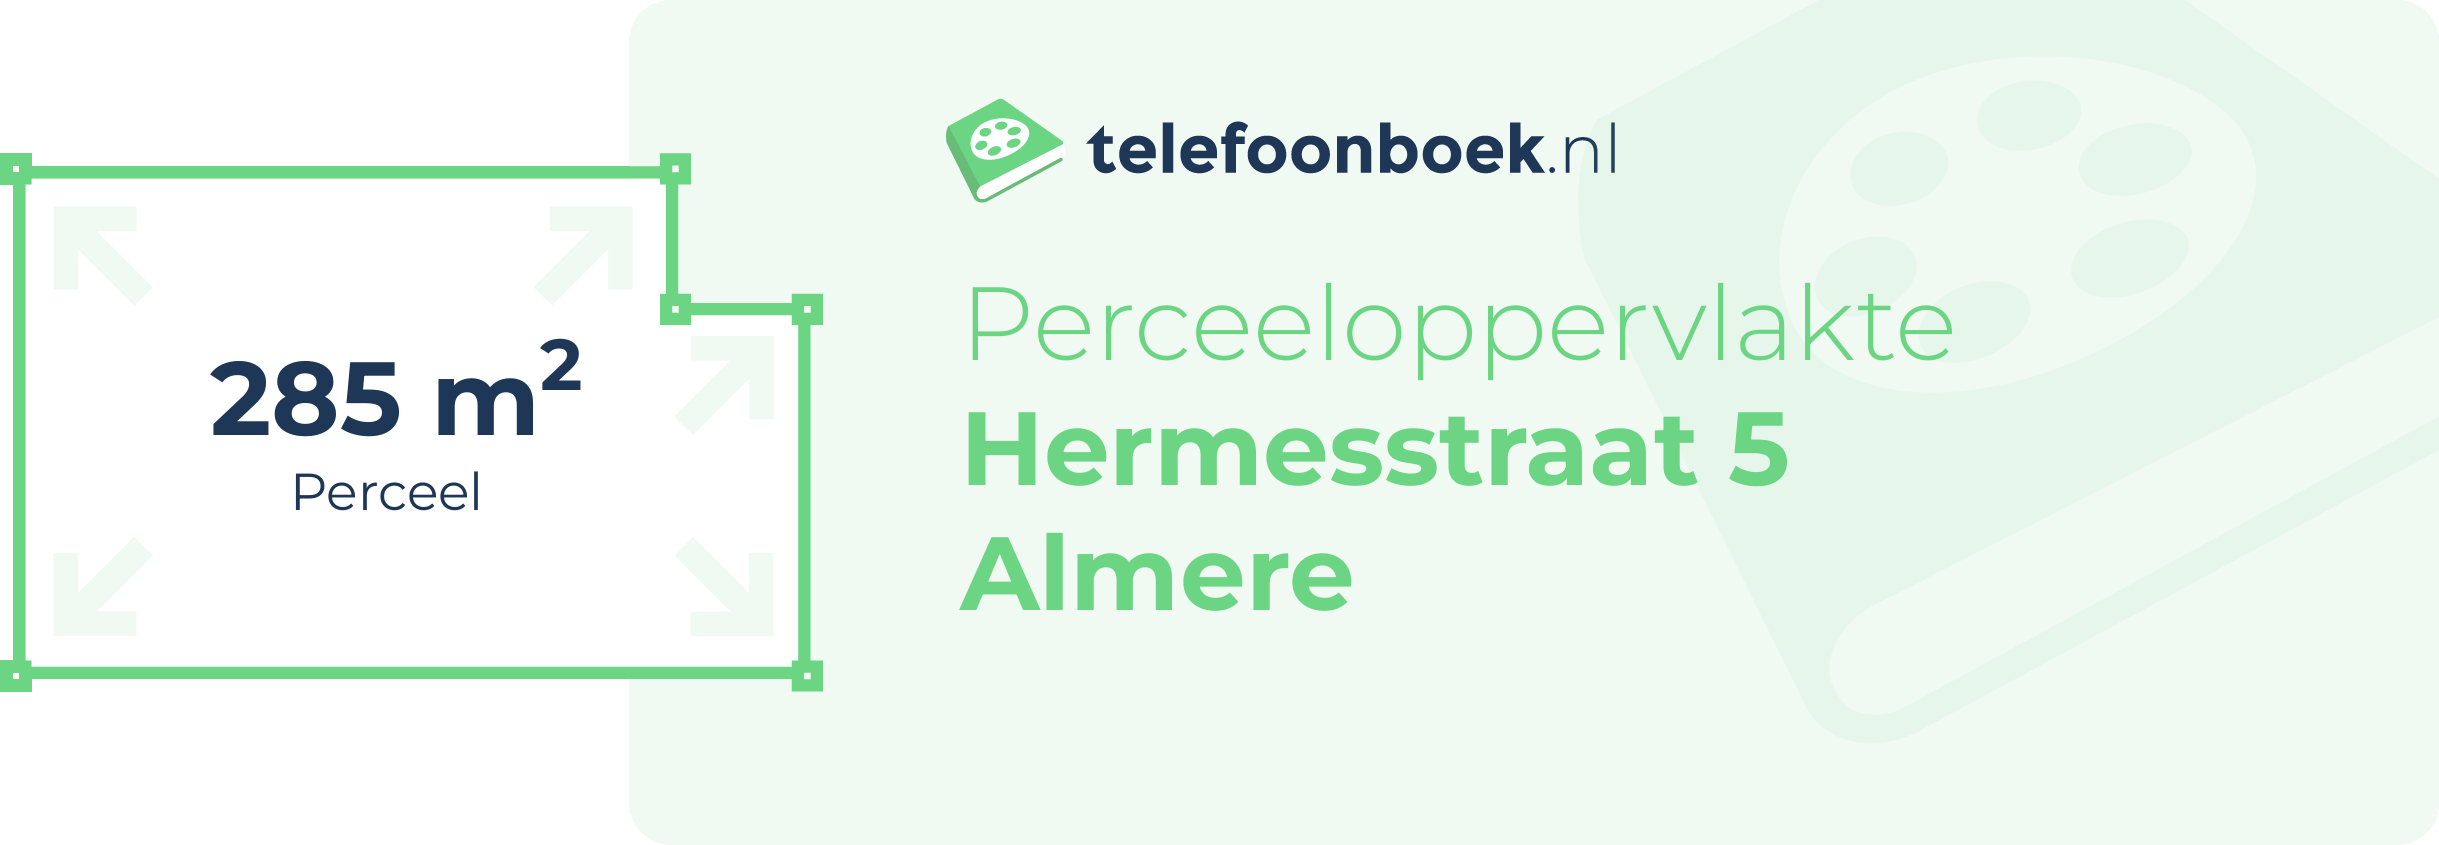 Perceeloppervlakte Hermesstraat 5 Almere